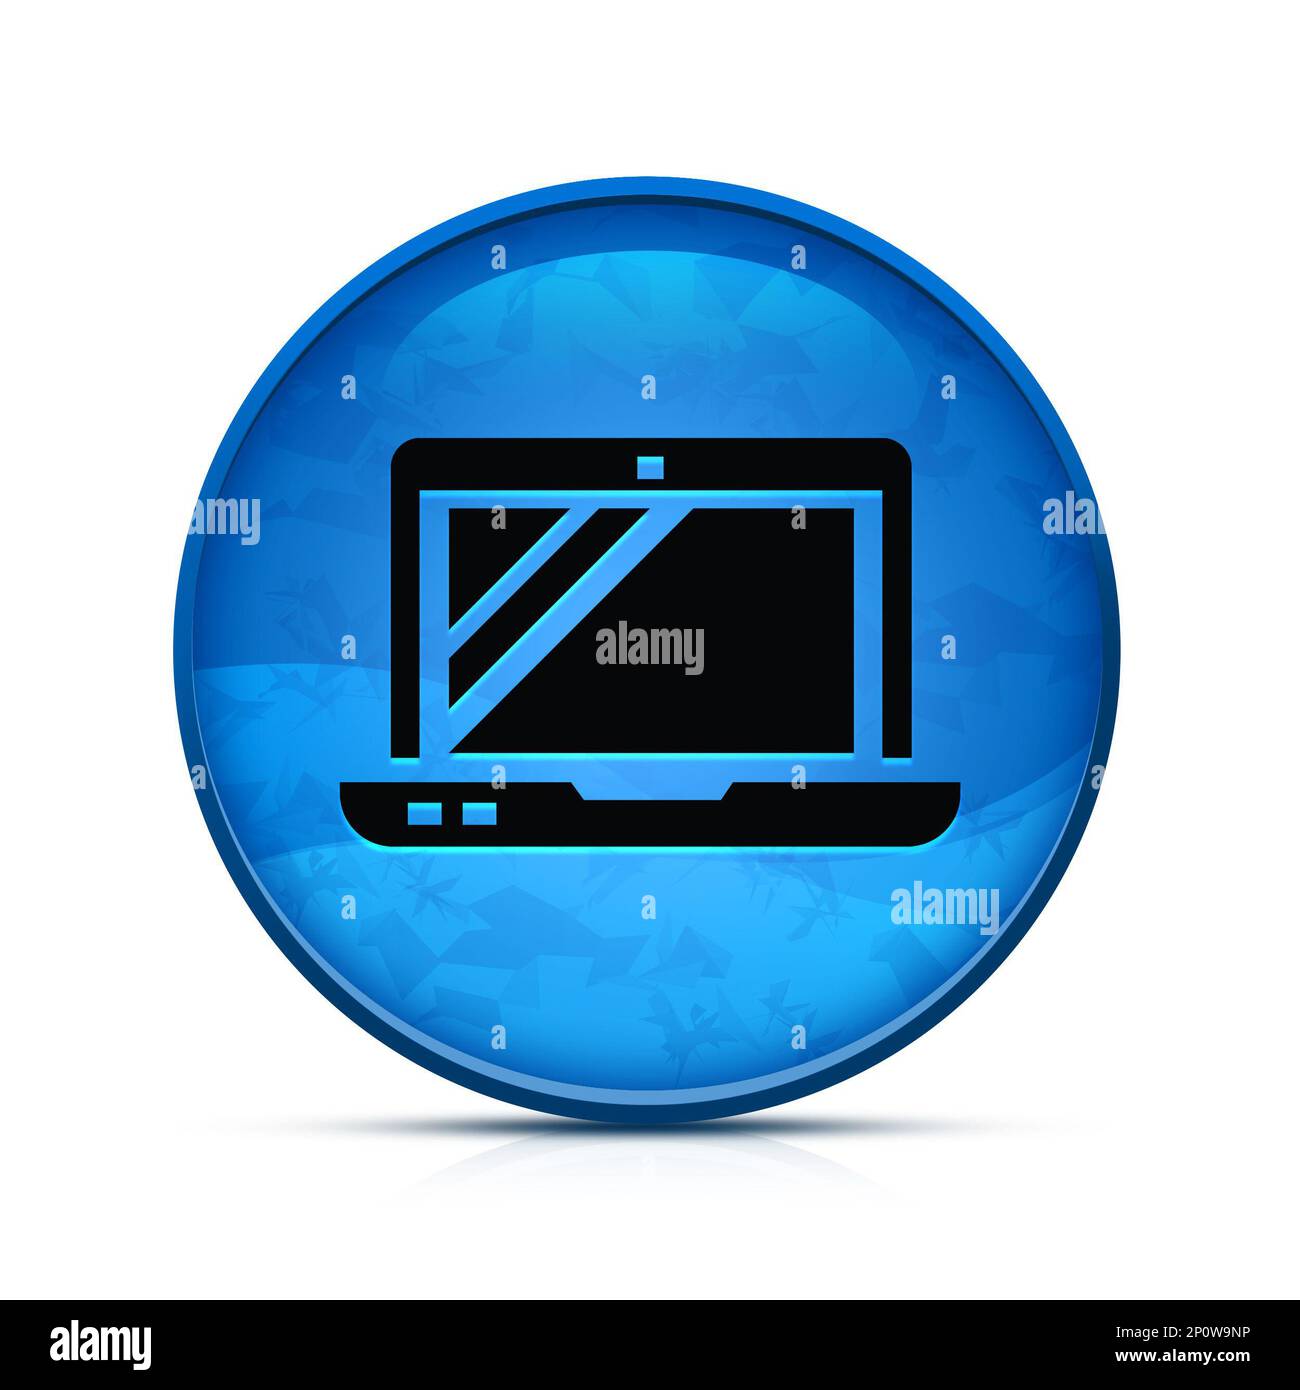 Technical skill icon on classy splash blue round button Stock Photo